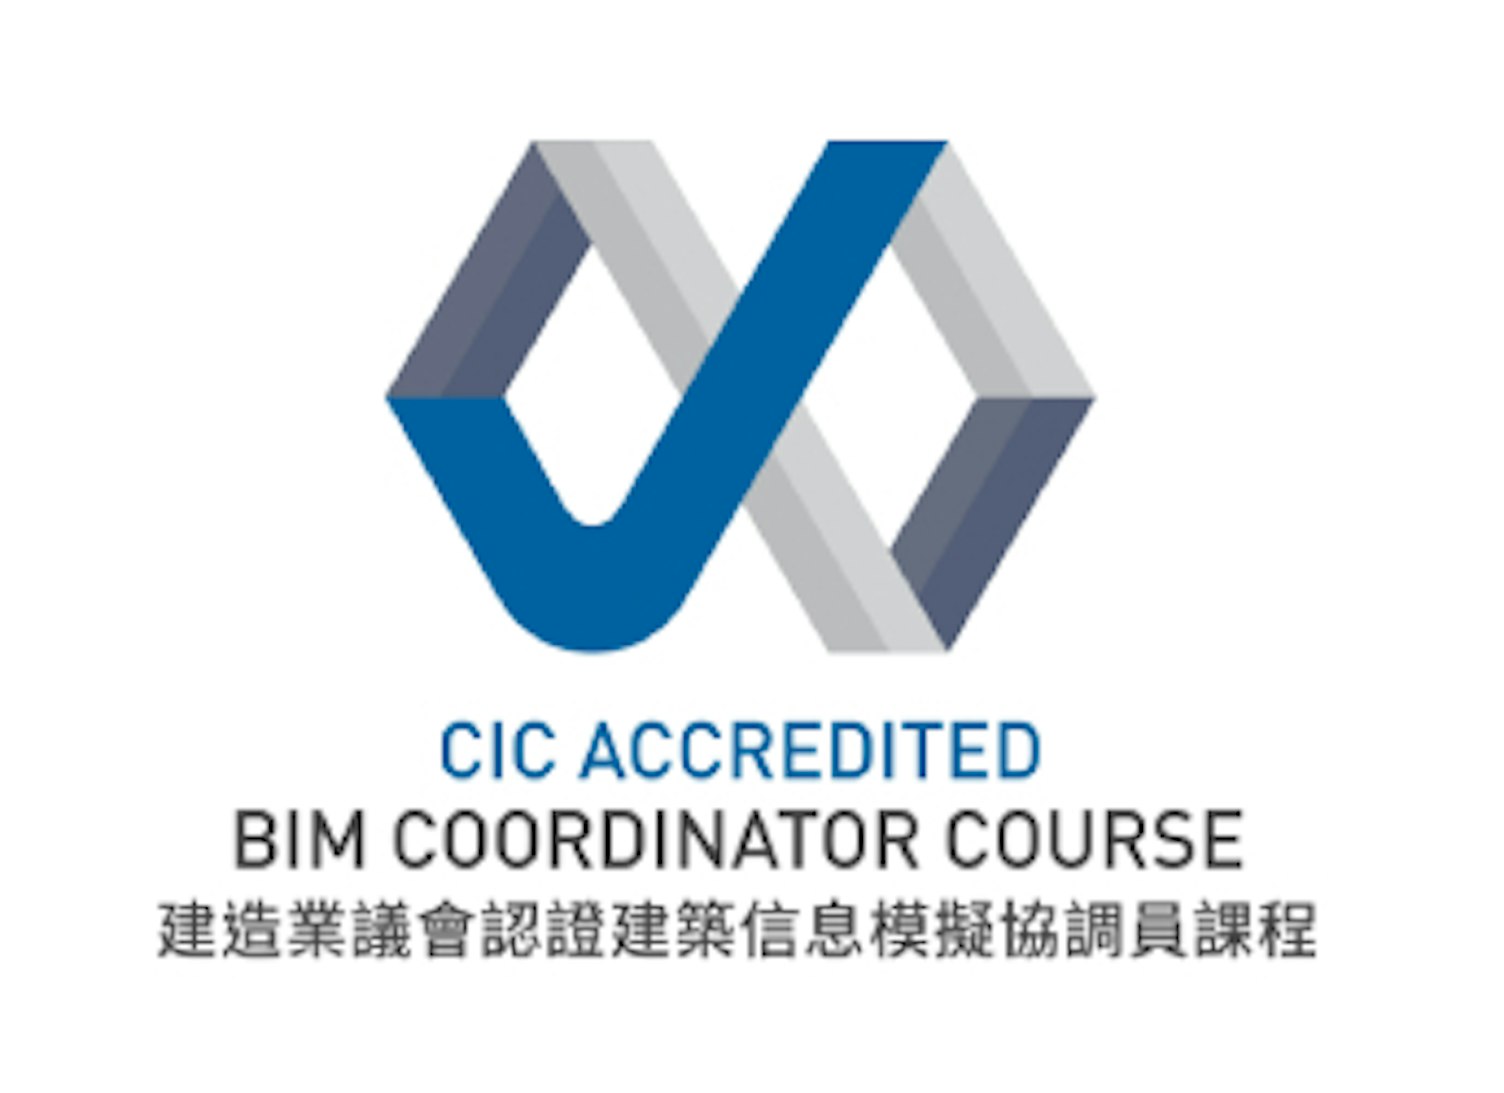 SGS Academy BIM Coordinator Course